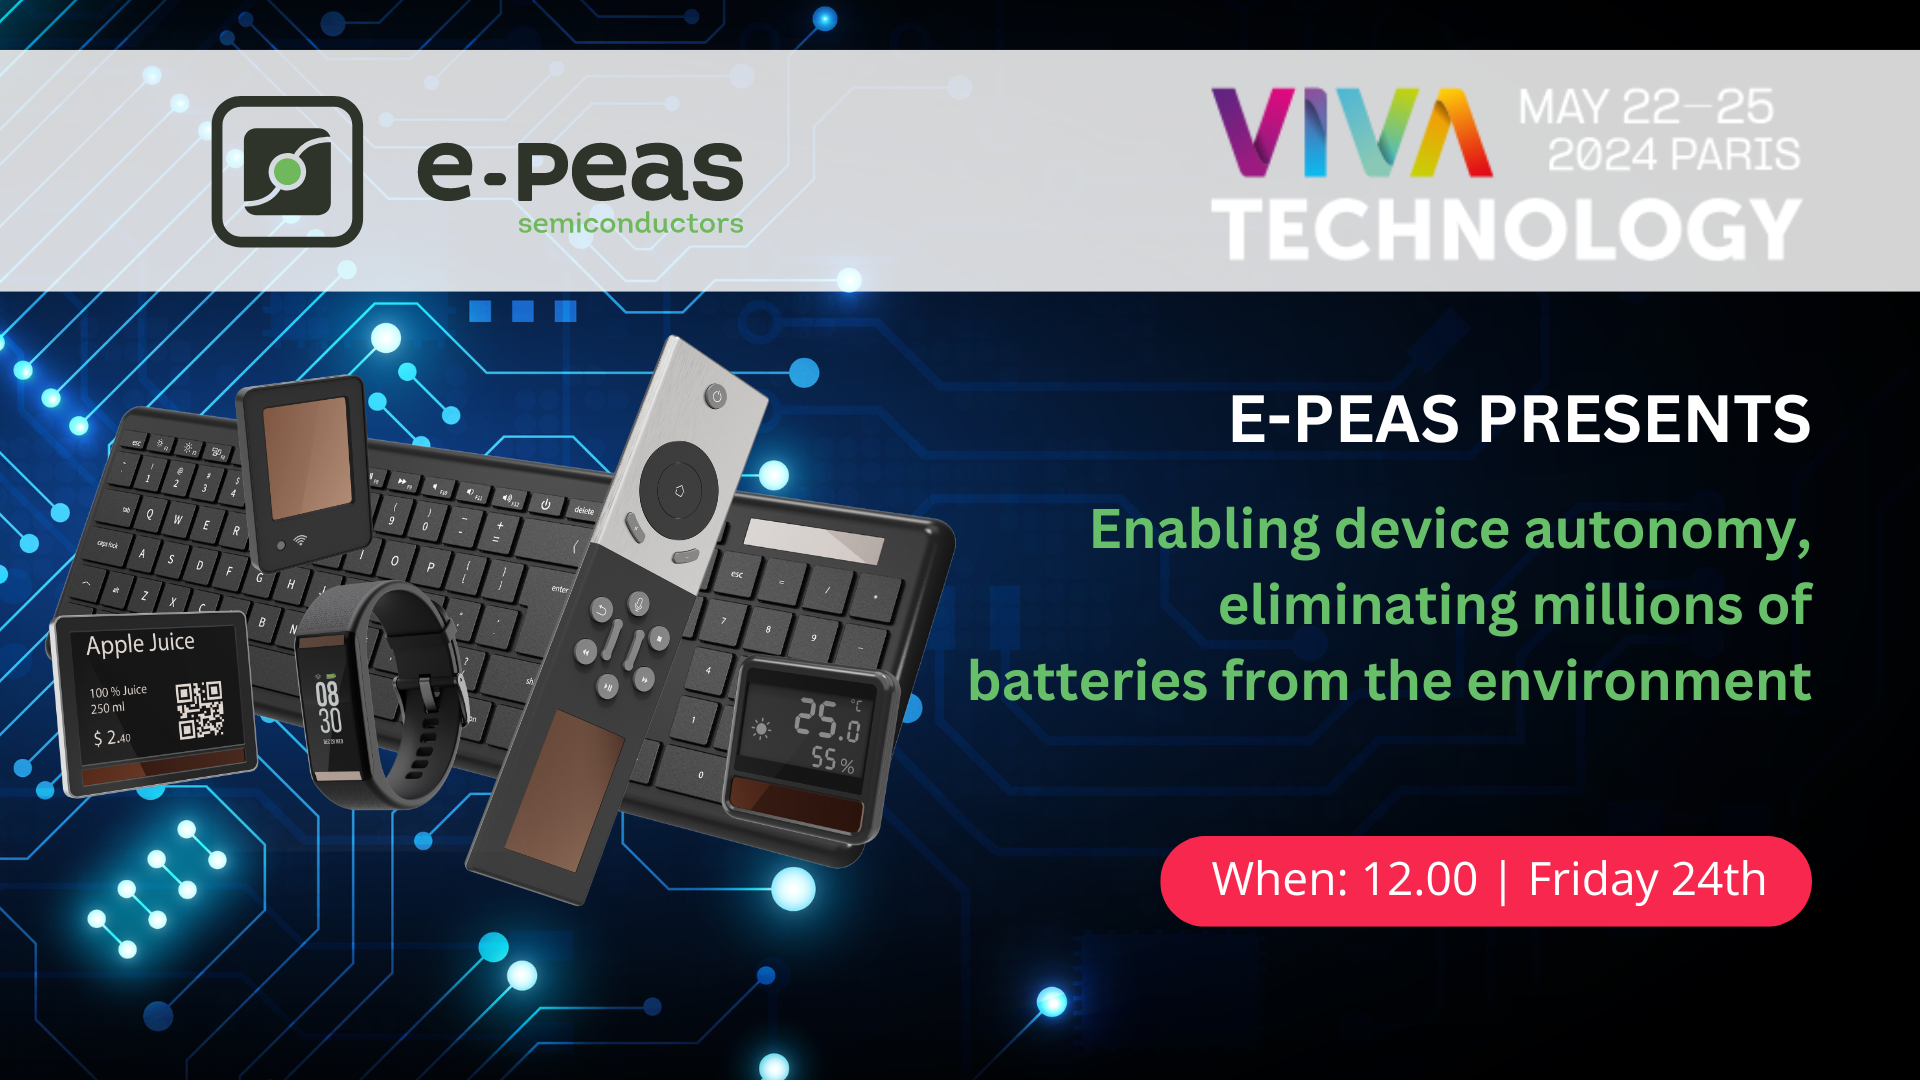 e-peas-vivatechnology-energy-harvesting-PMIC-1